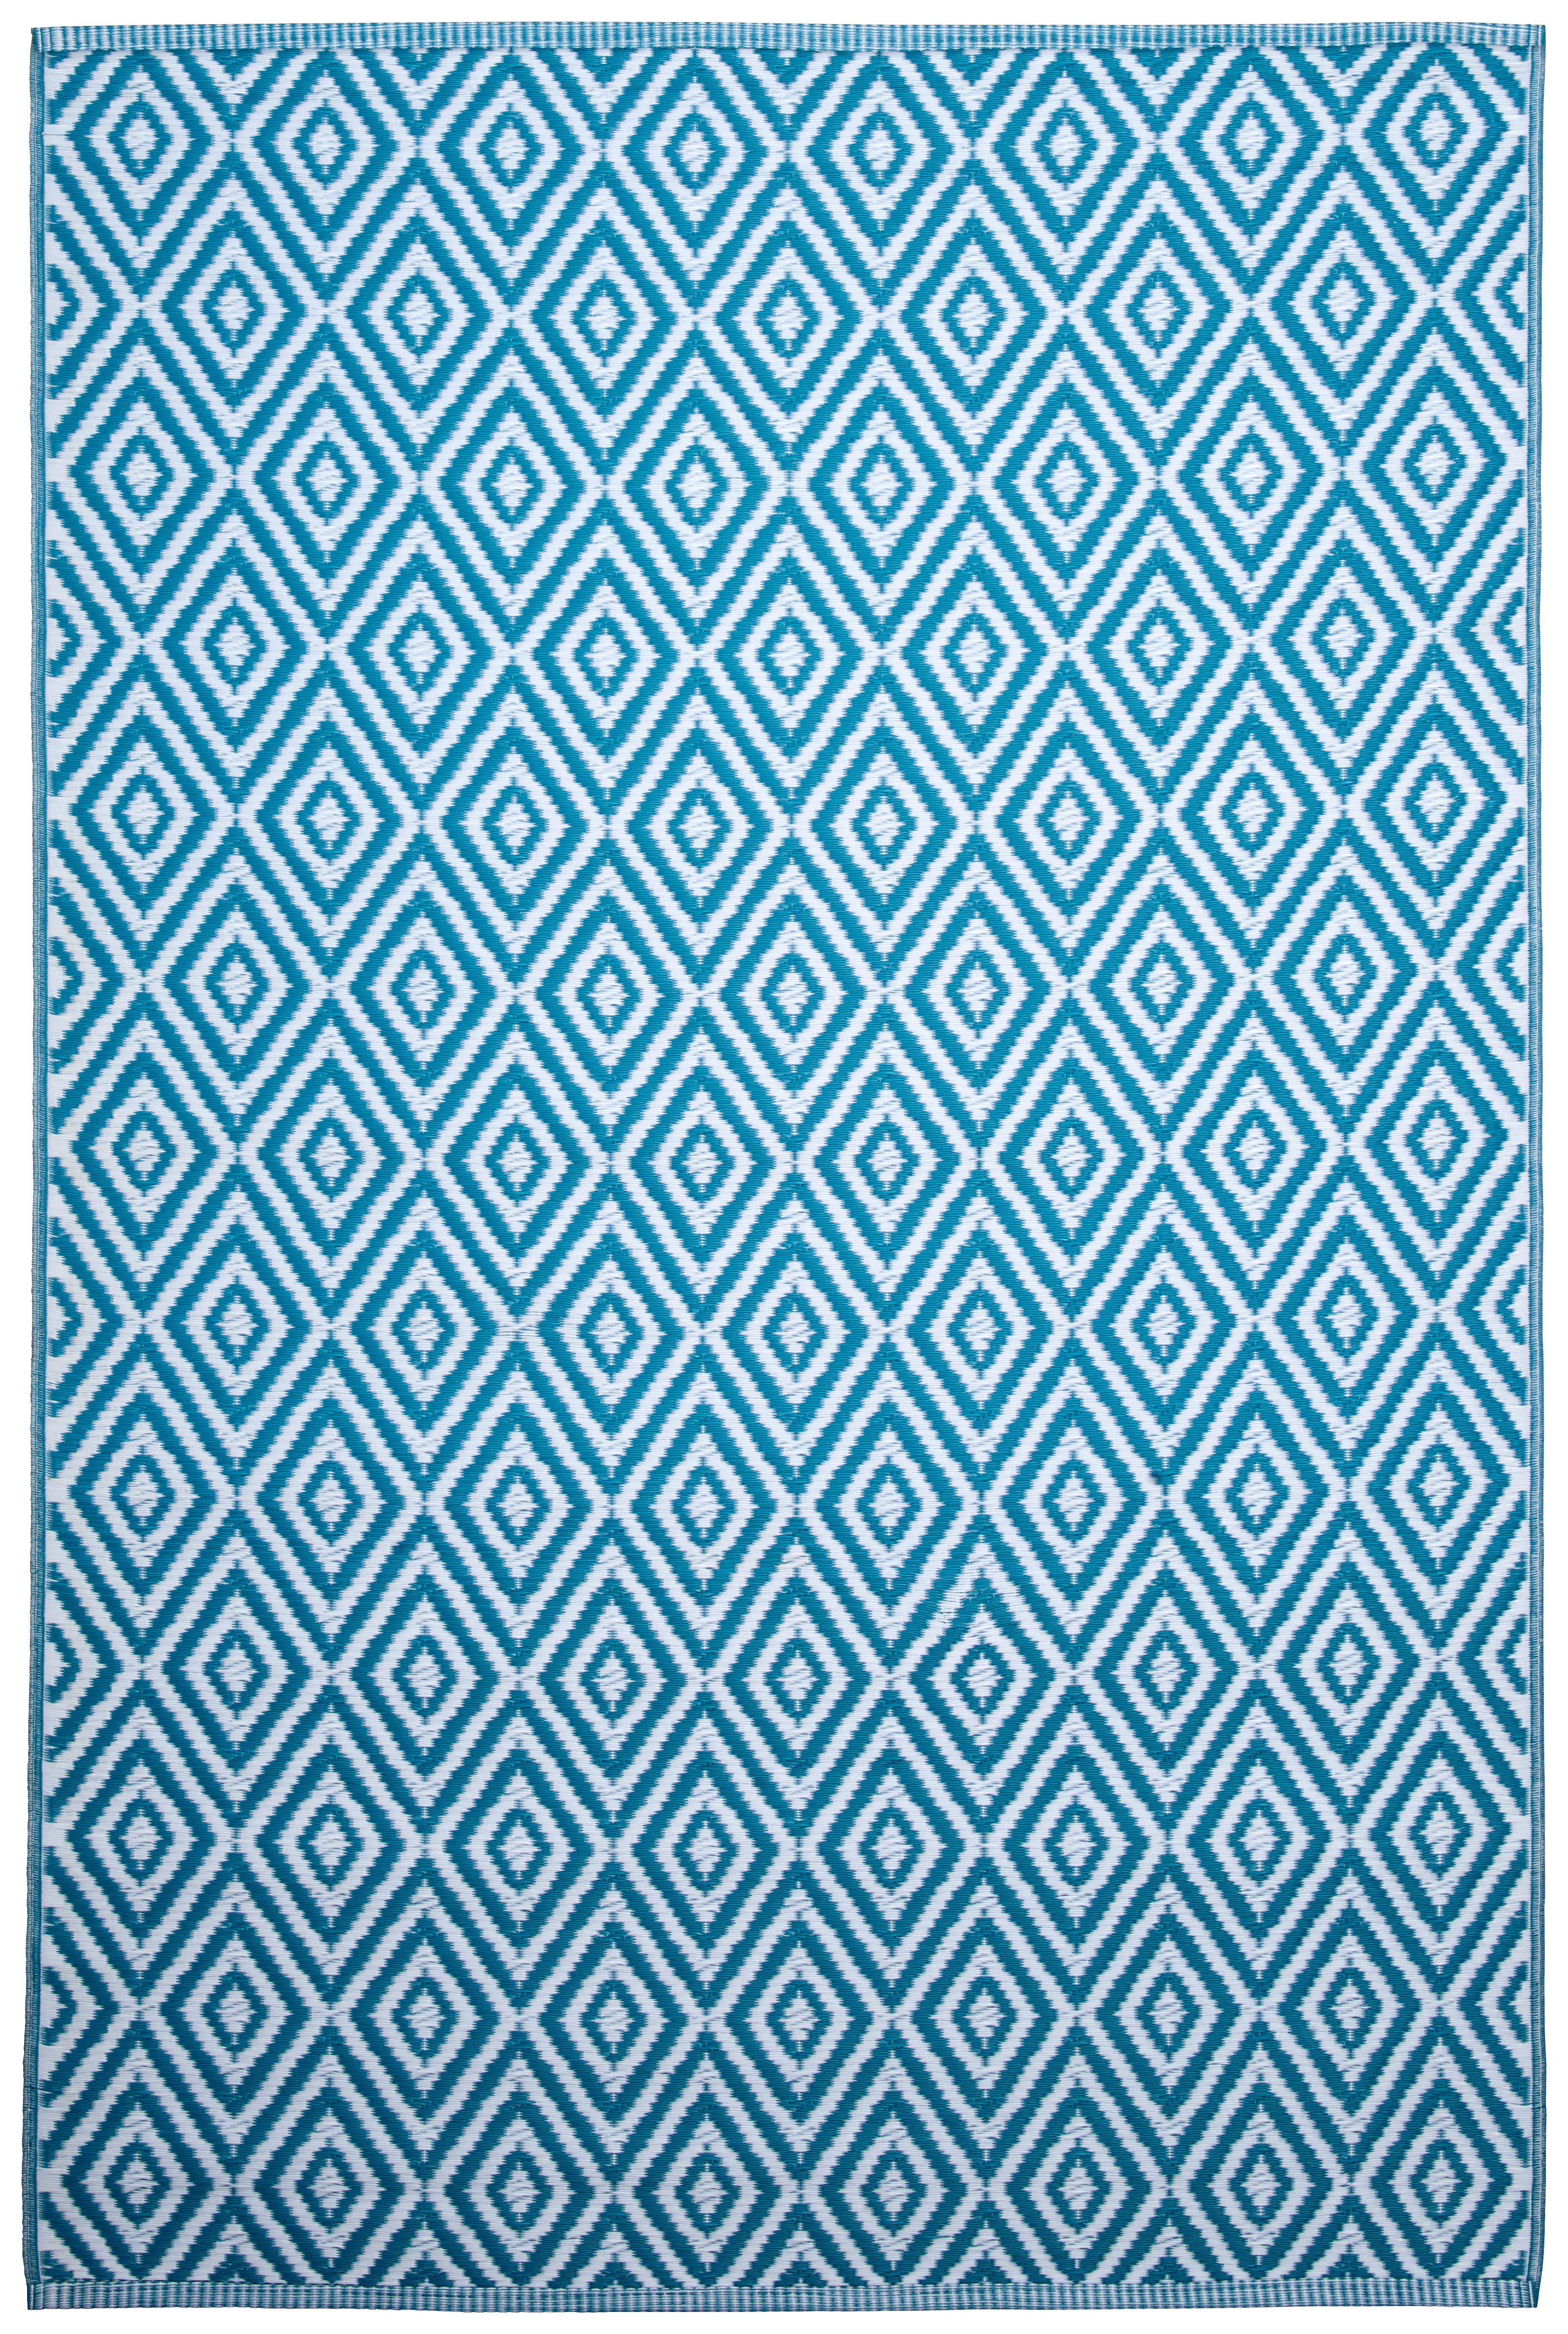 OUTDOORTEPPICH 120/180 cm Ibiza  - Blau, Trend, Textil (120/180cm) - Boxxx